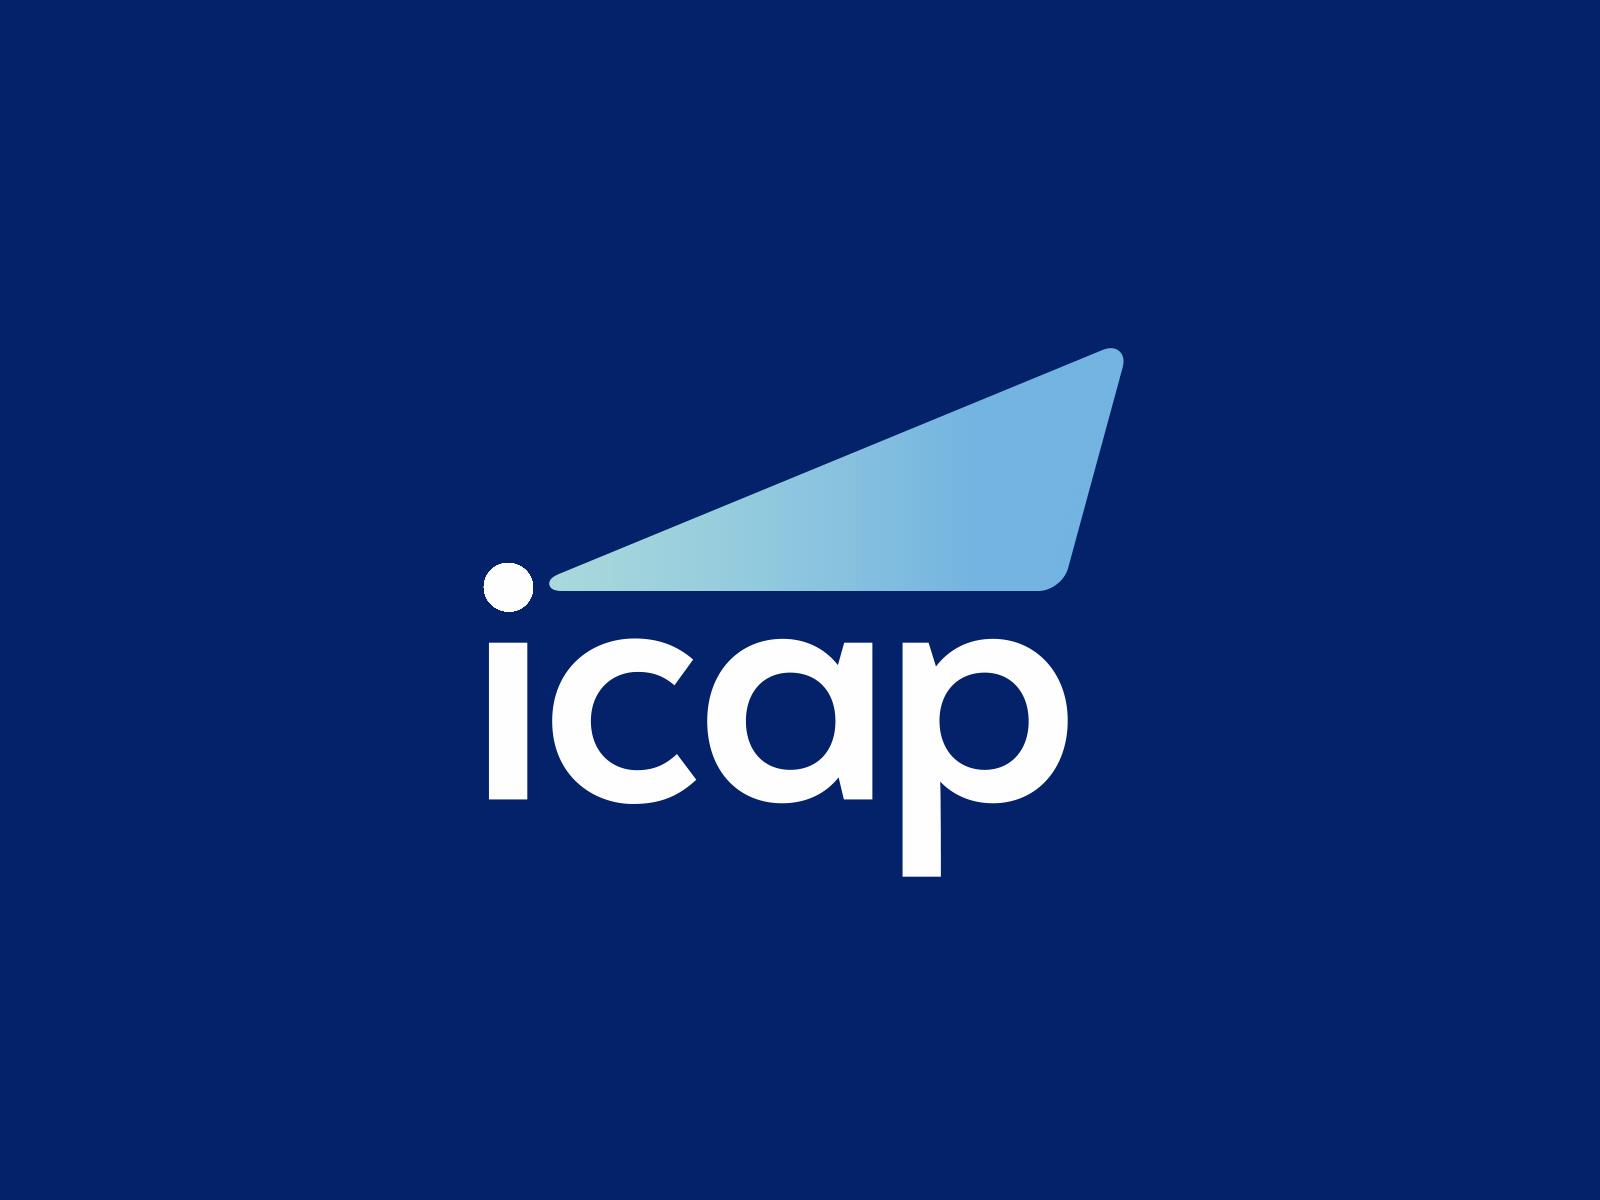 ICAP - Logo Animation (alter version)